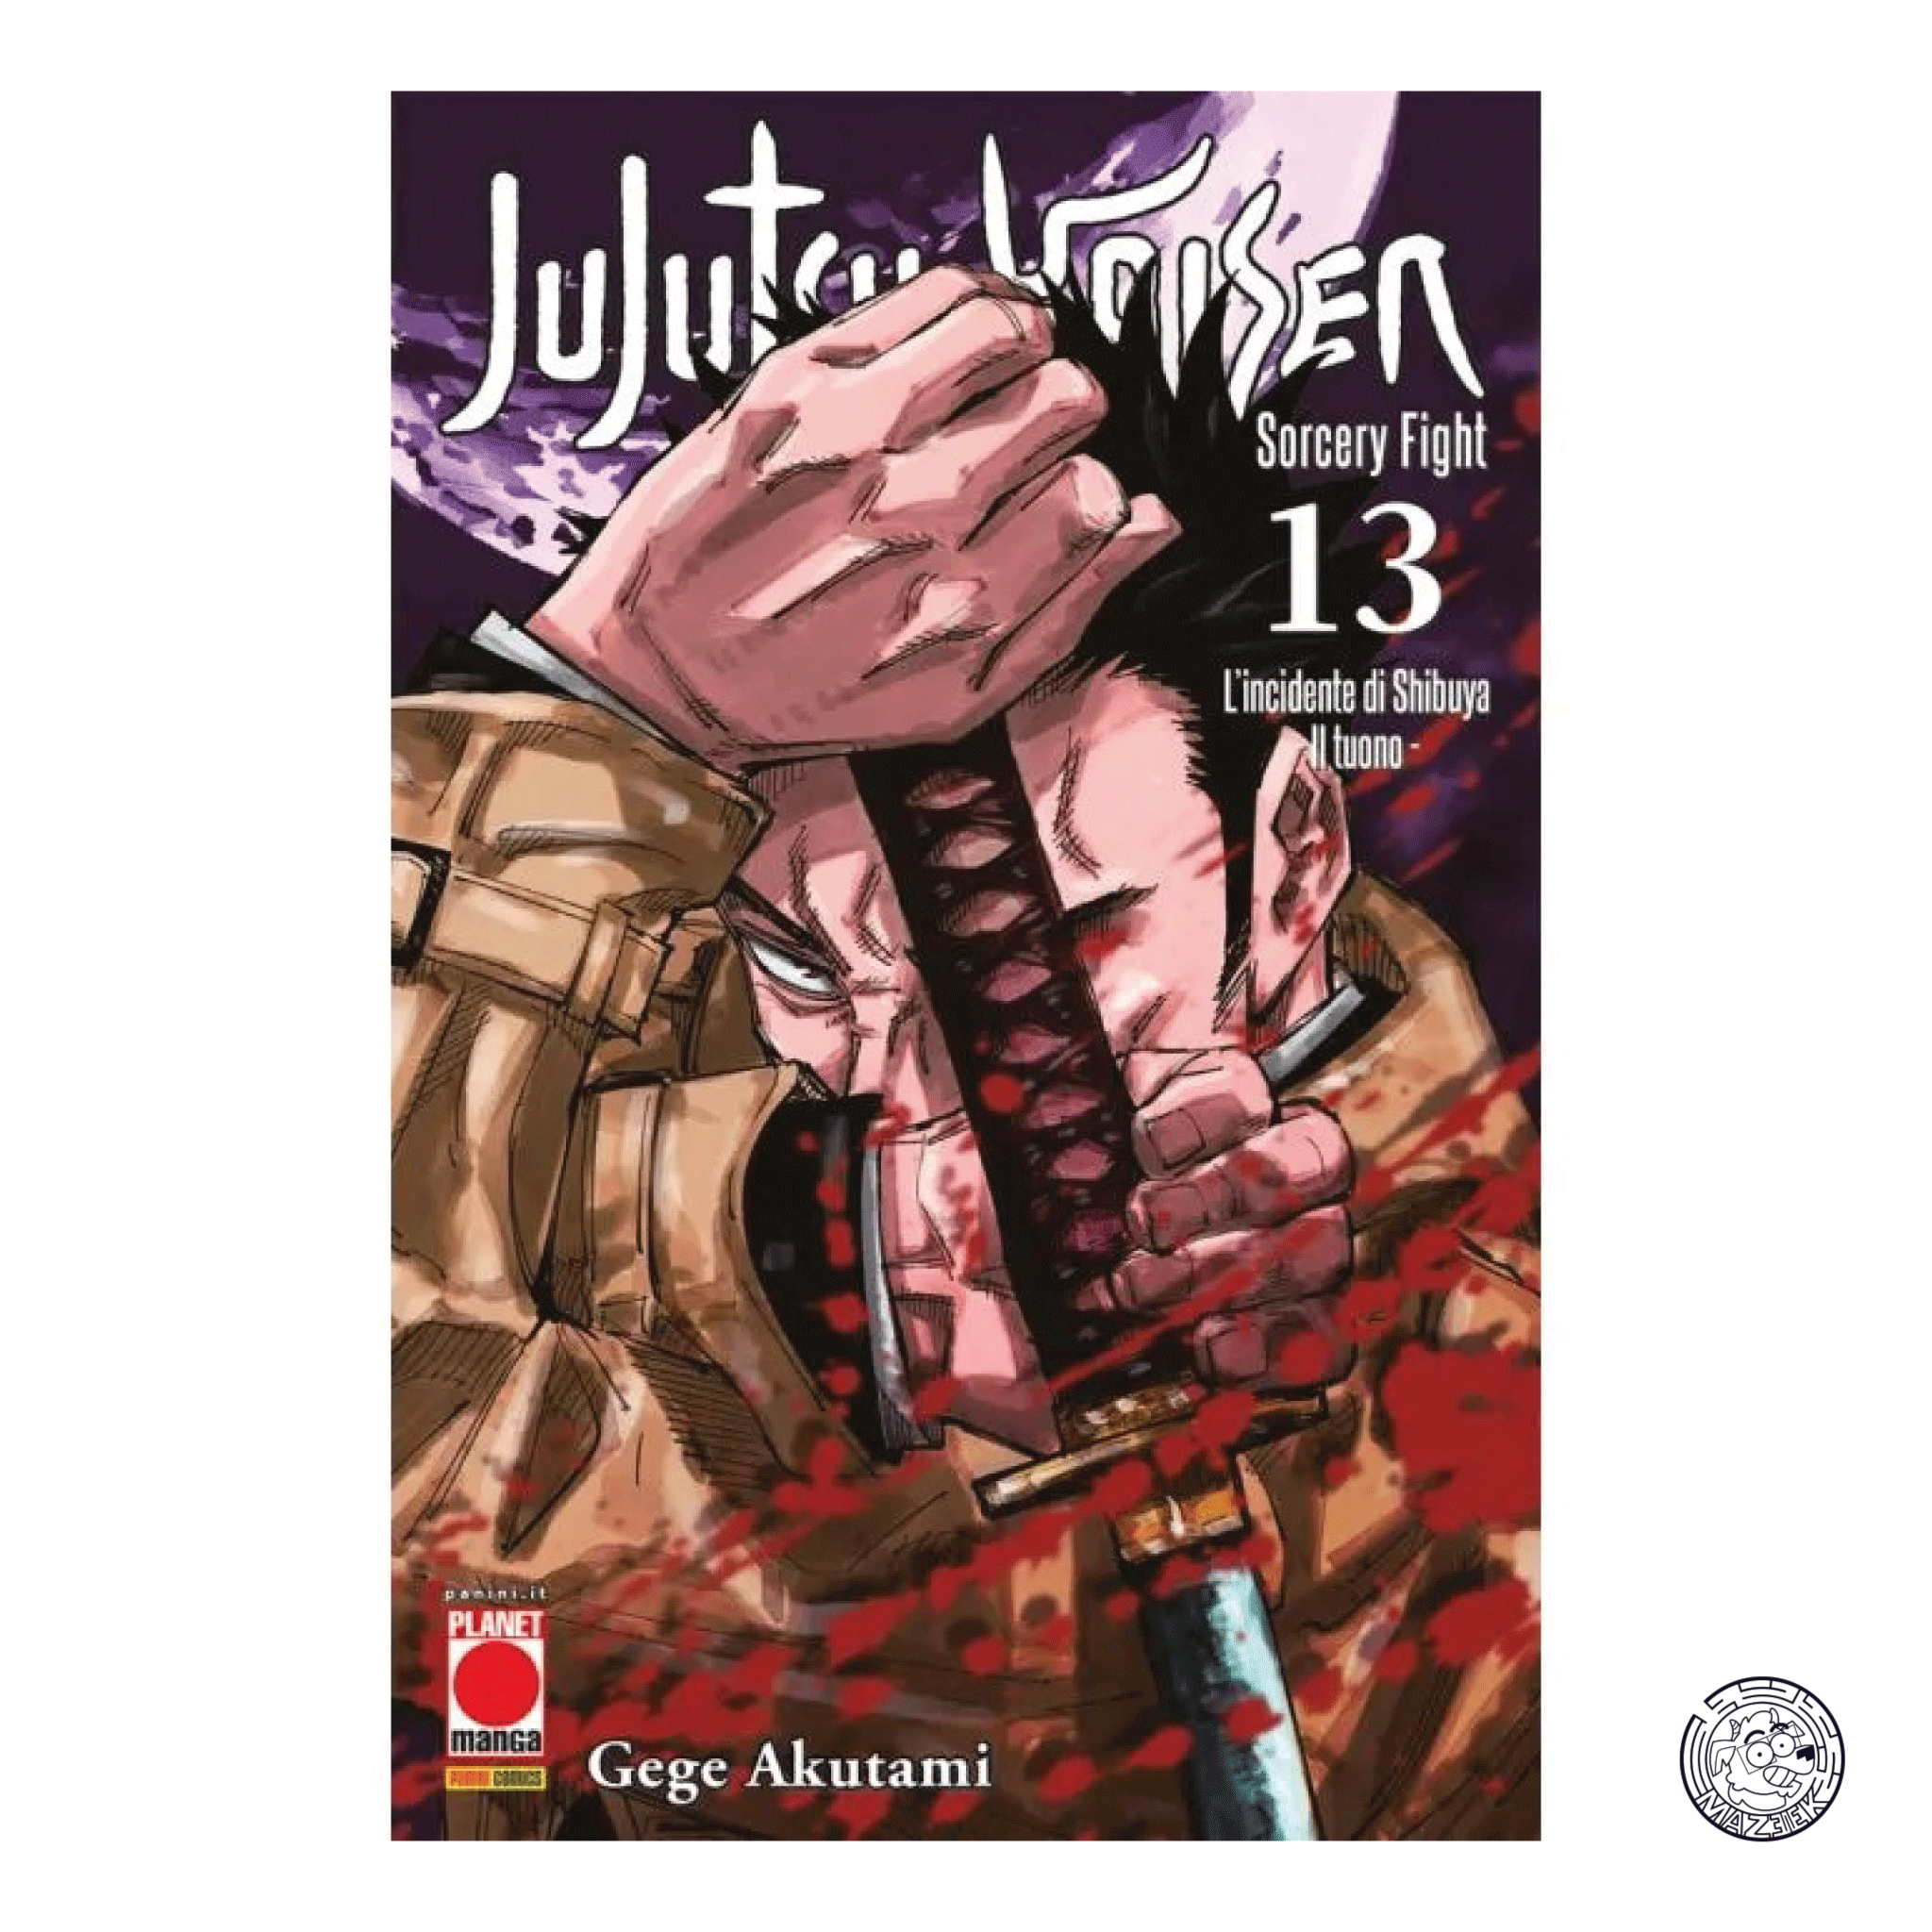 Jujutsu Kaisen: Sorcery Fight 13 - First Printing